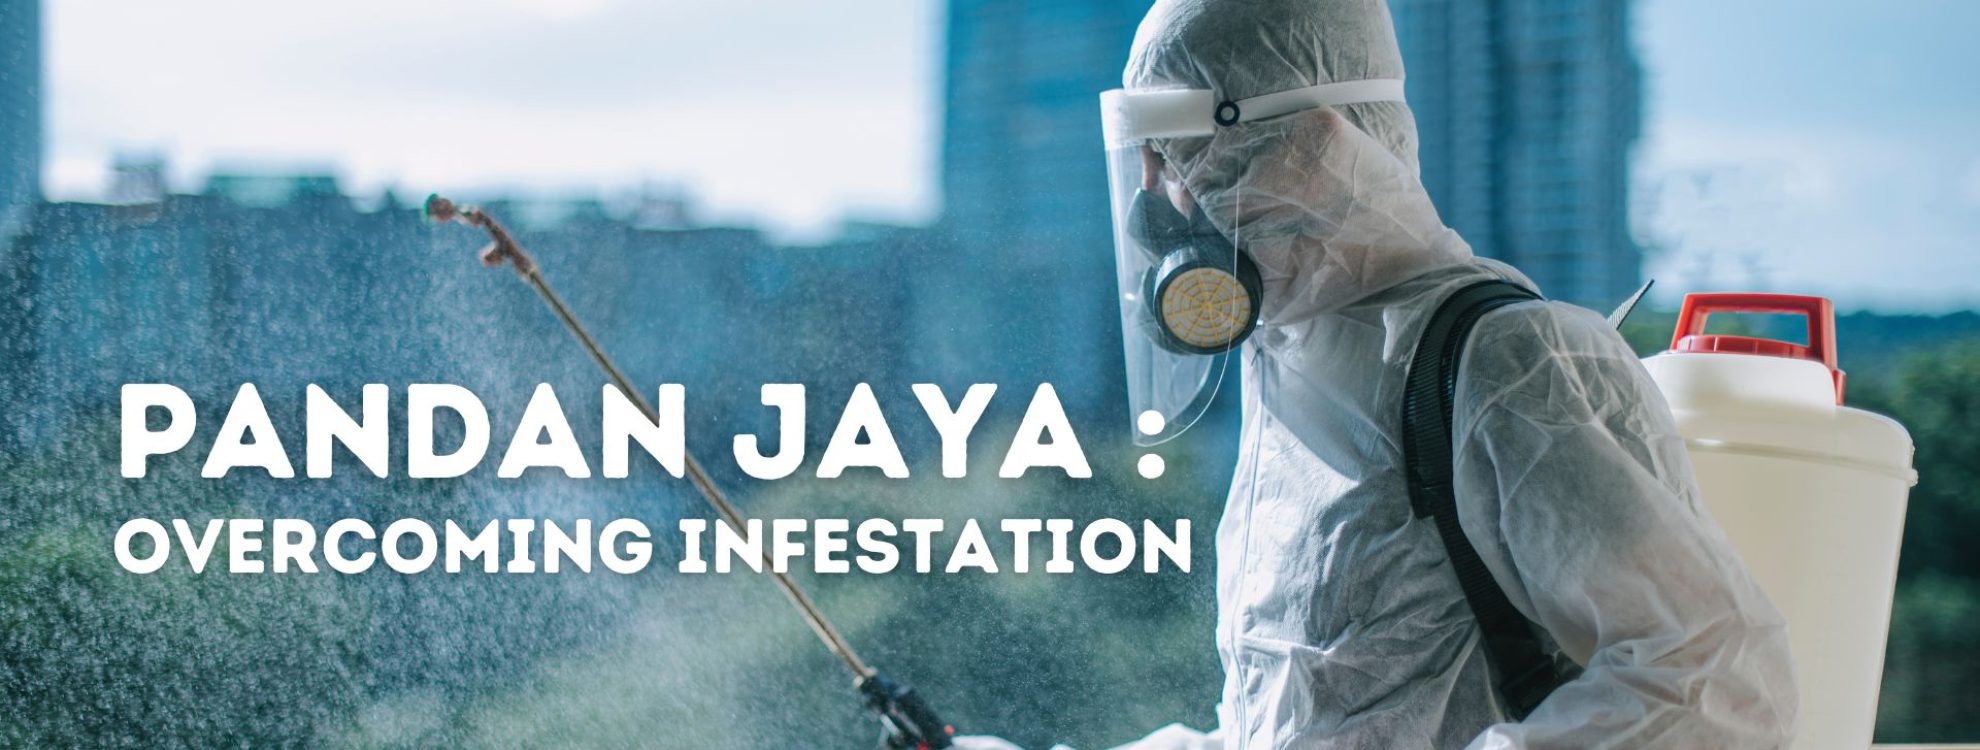 spraying pesticides in pandan jaya in efforts of overcoming infestation